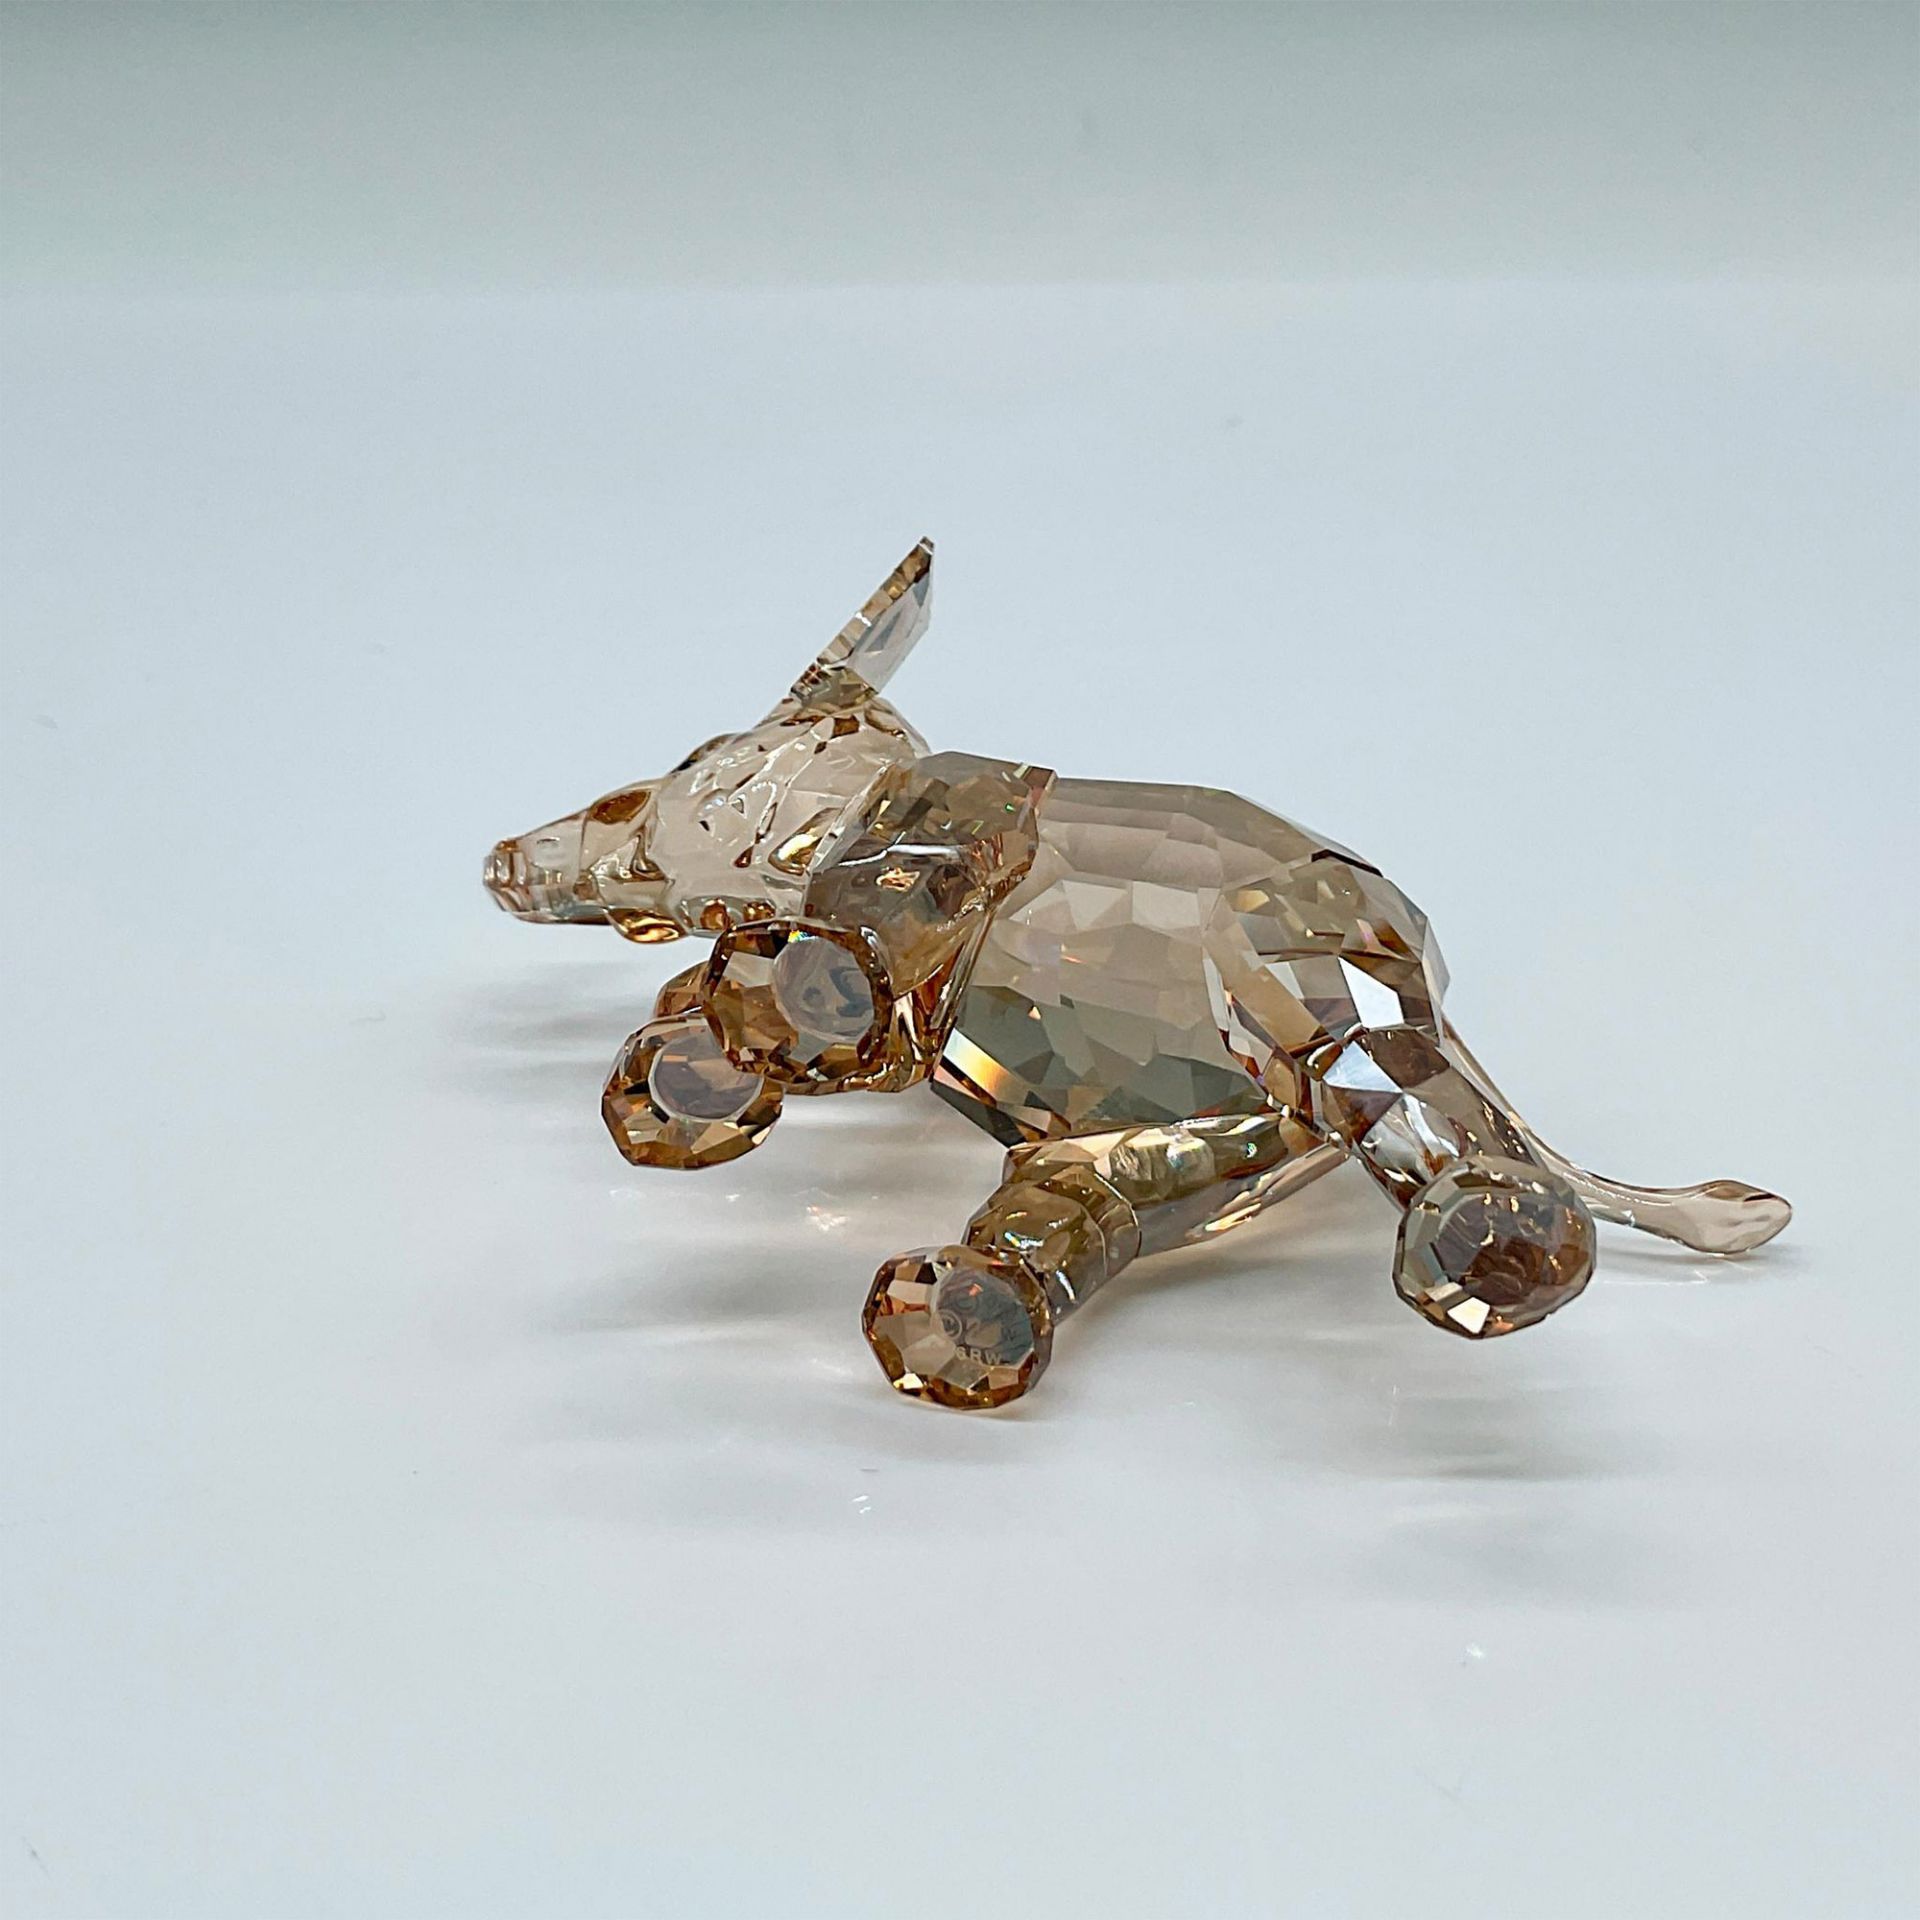 Swarovski Crystal Society Figurine, Young Elephant - Image 3 of 3